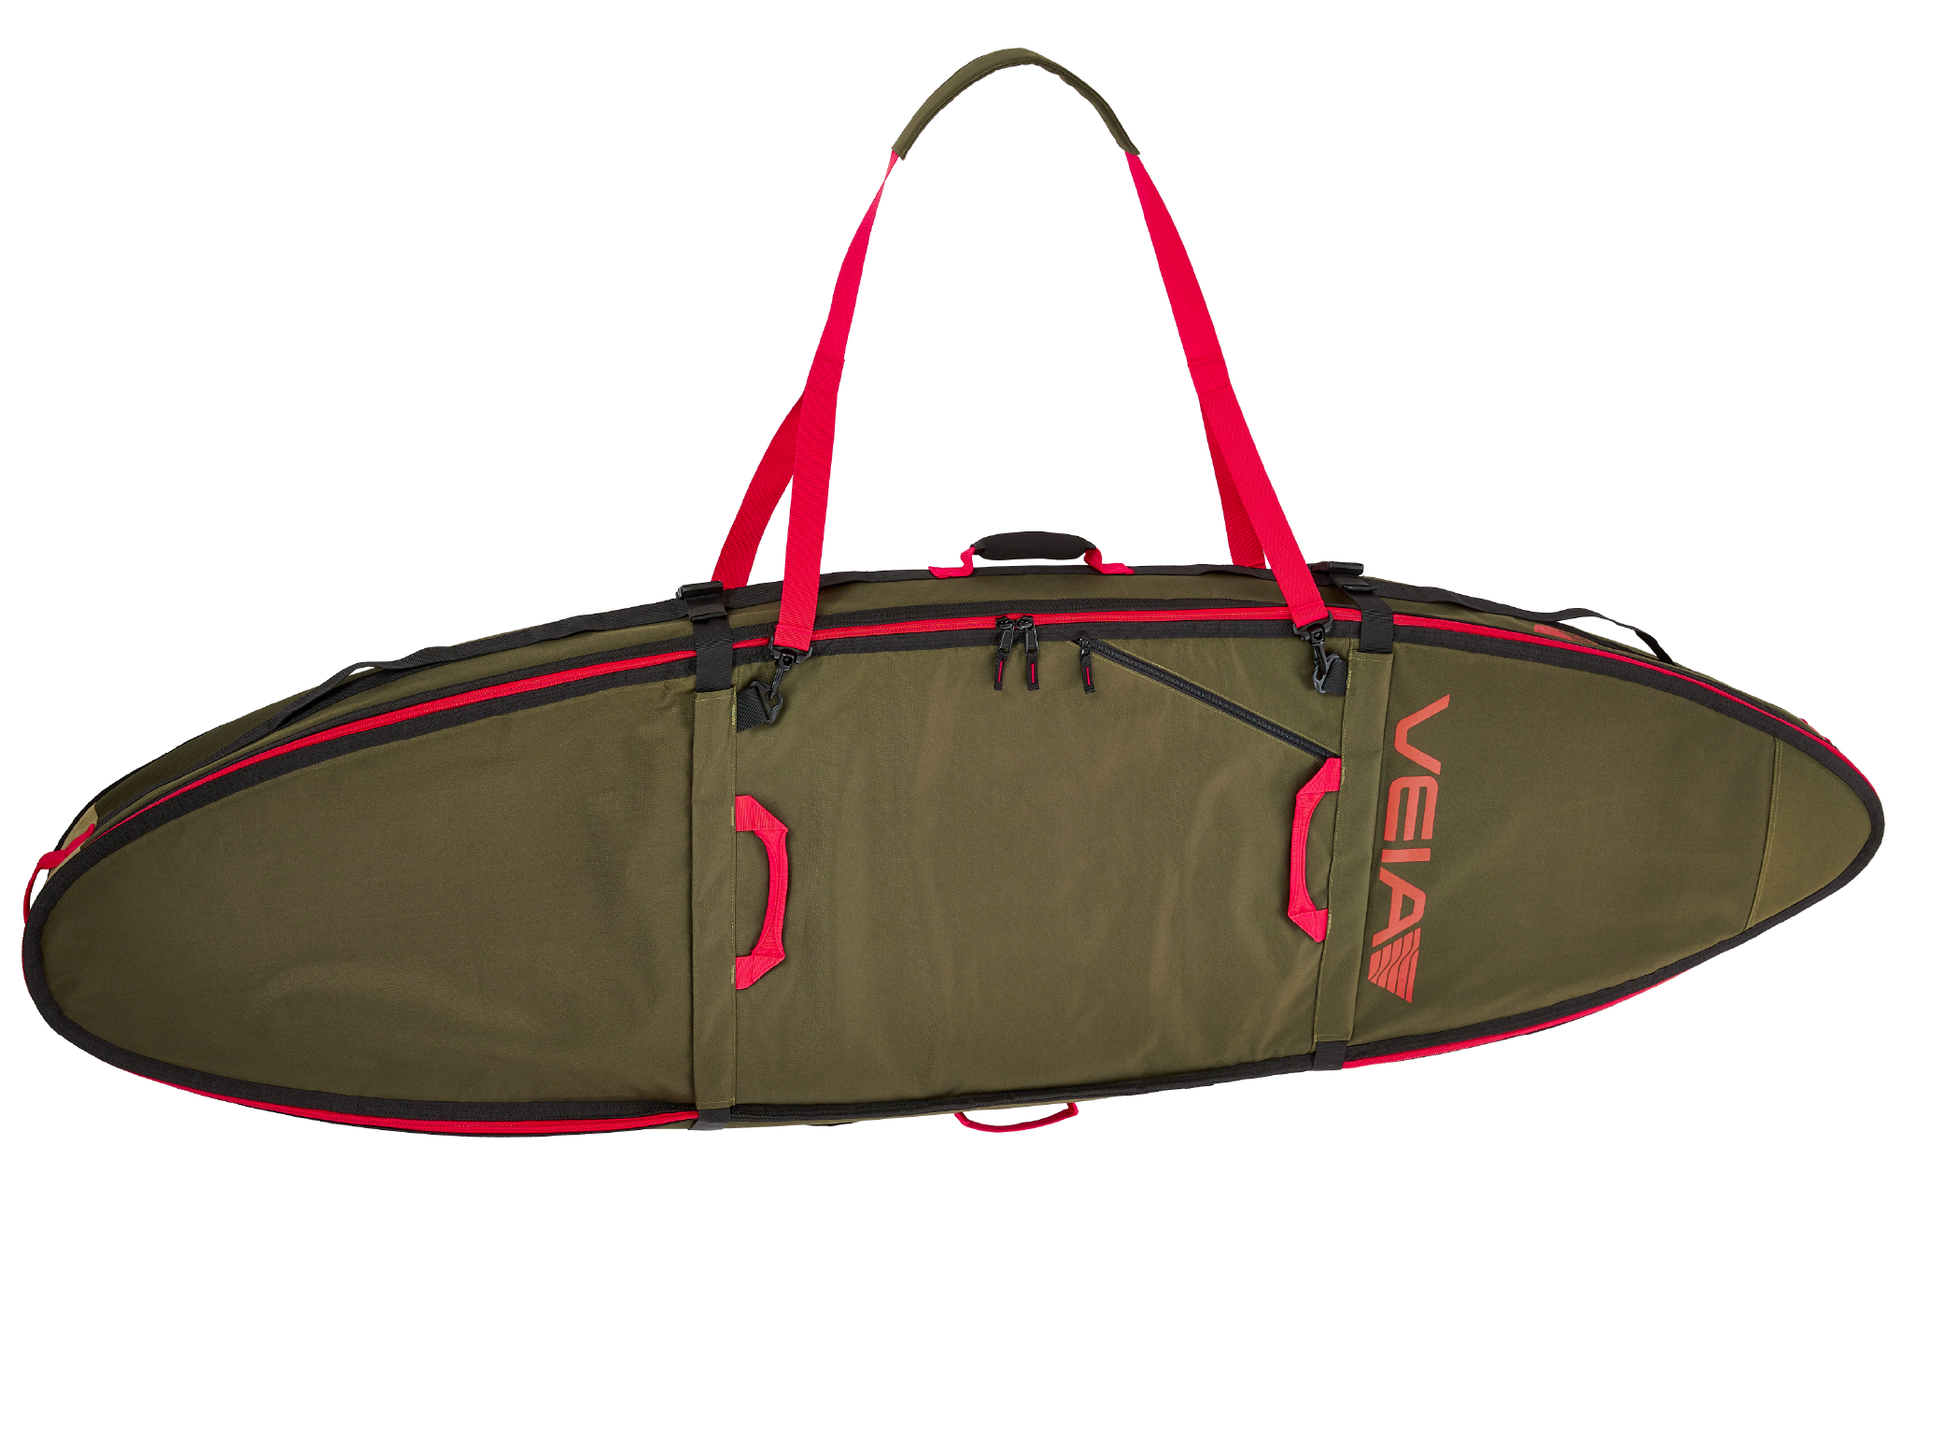 VEIA 3/2 Travel Surfboard Bag